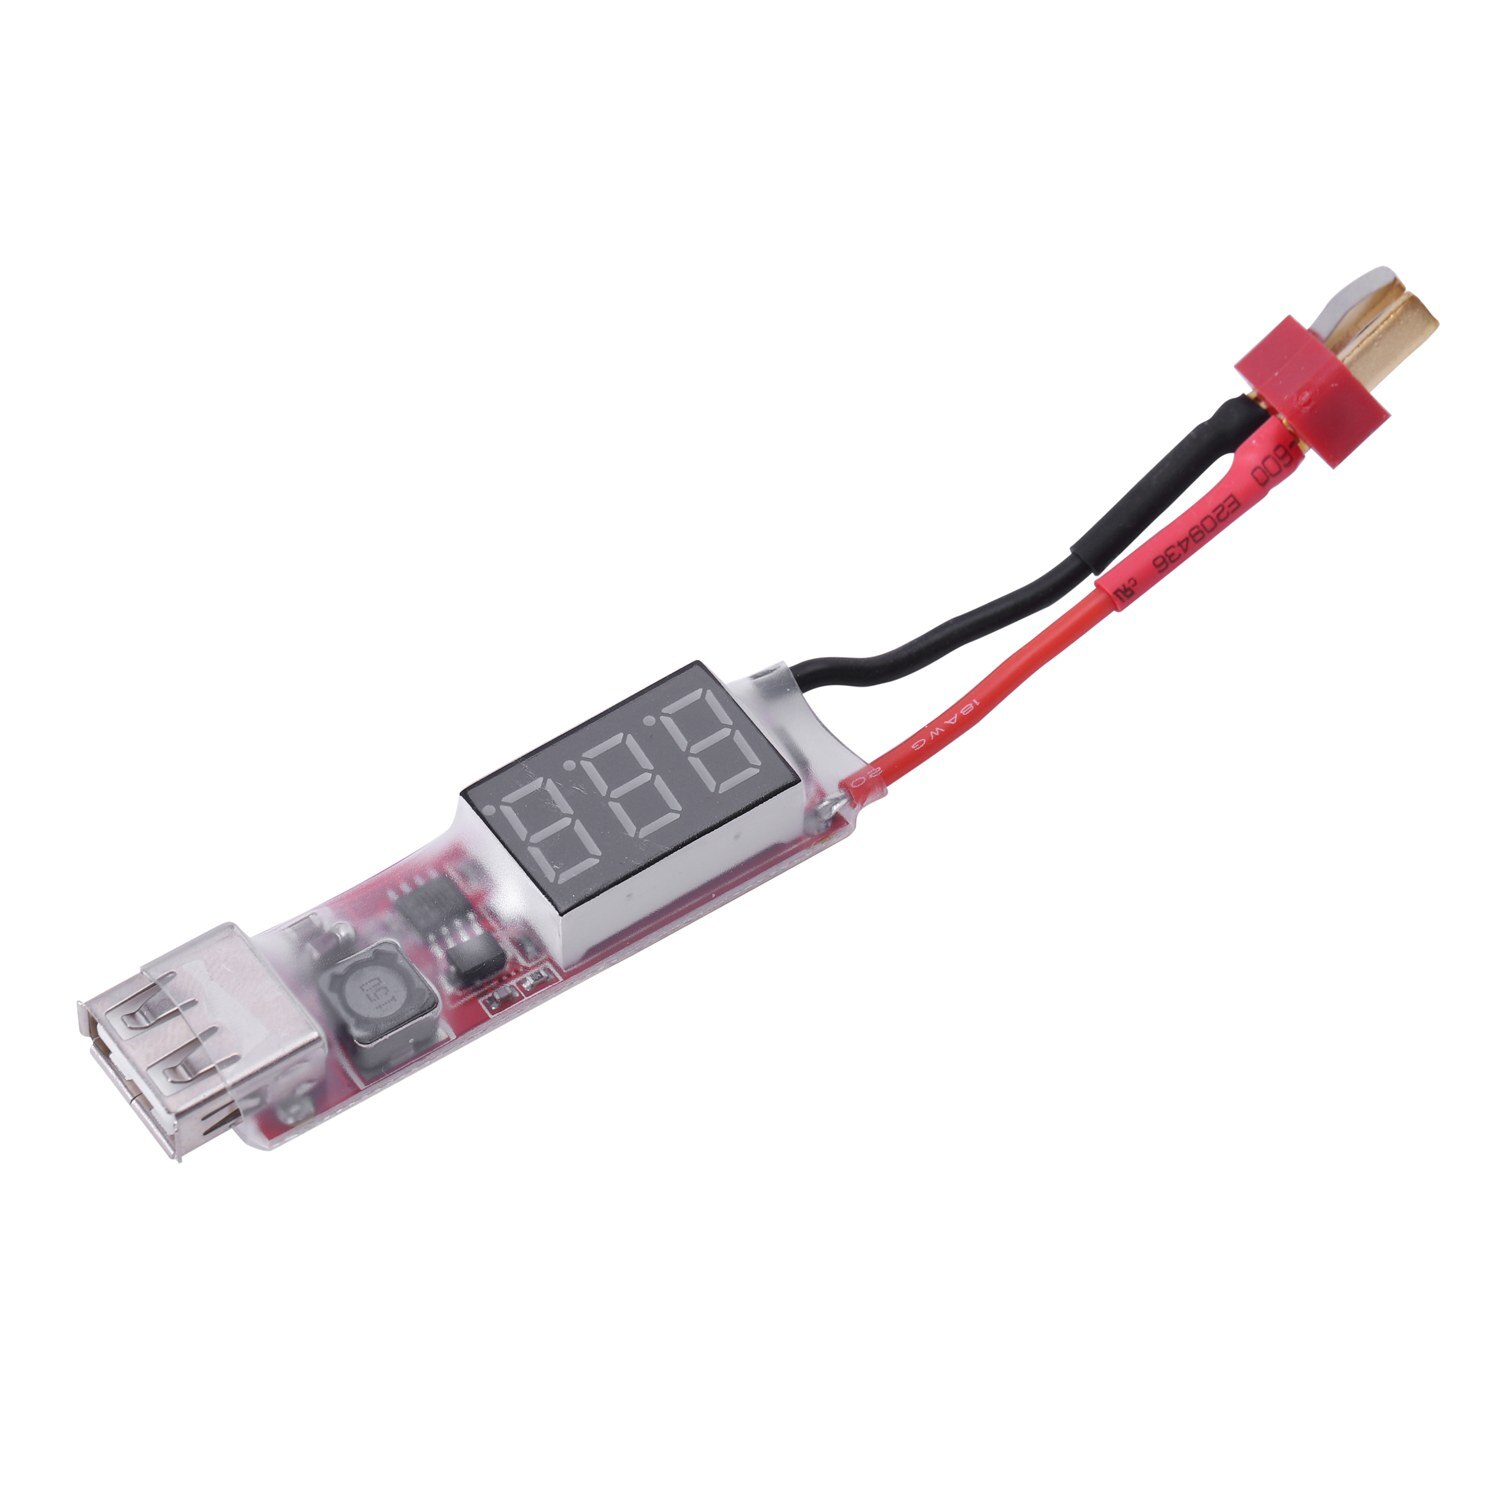 RC Hobby & Speelgoed Batterij en Lader-2 S-6 S naar USB Power Converter Adapter met Digitale display 5 V 2A-T Plug-1x2 S-6 S Lip